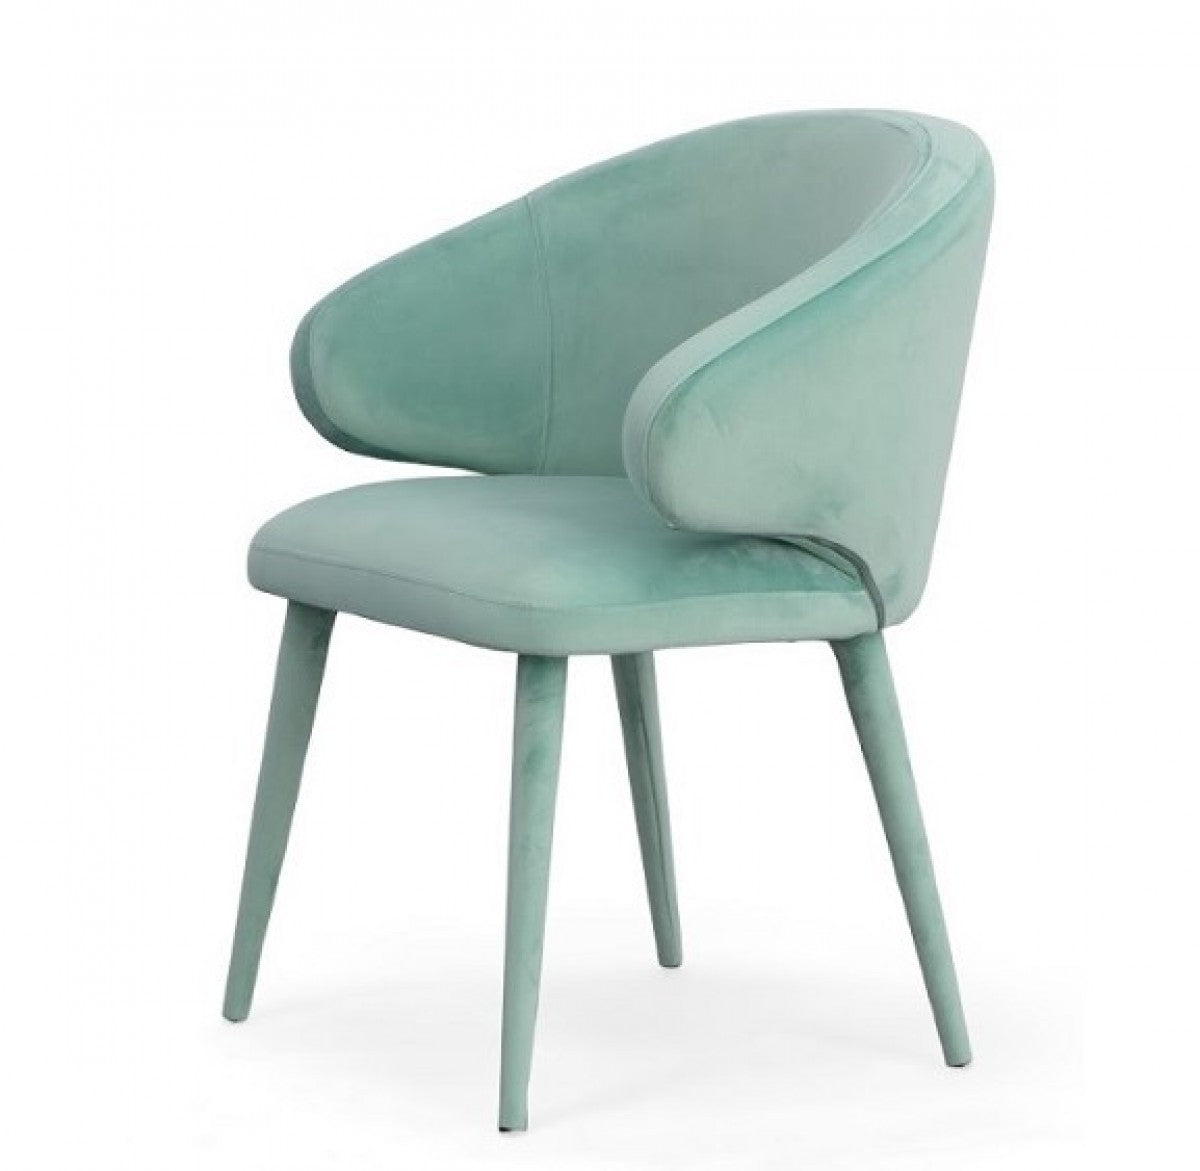 Modrest Salem Modern Aqua Fabric Dining Chair